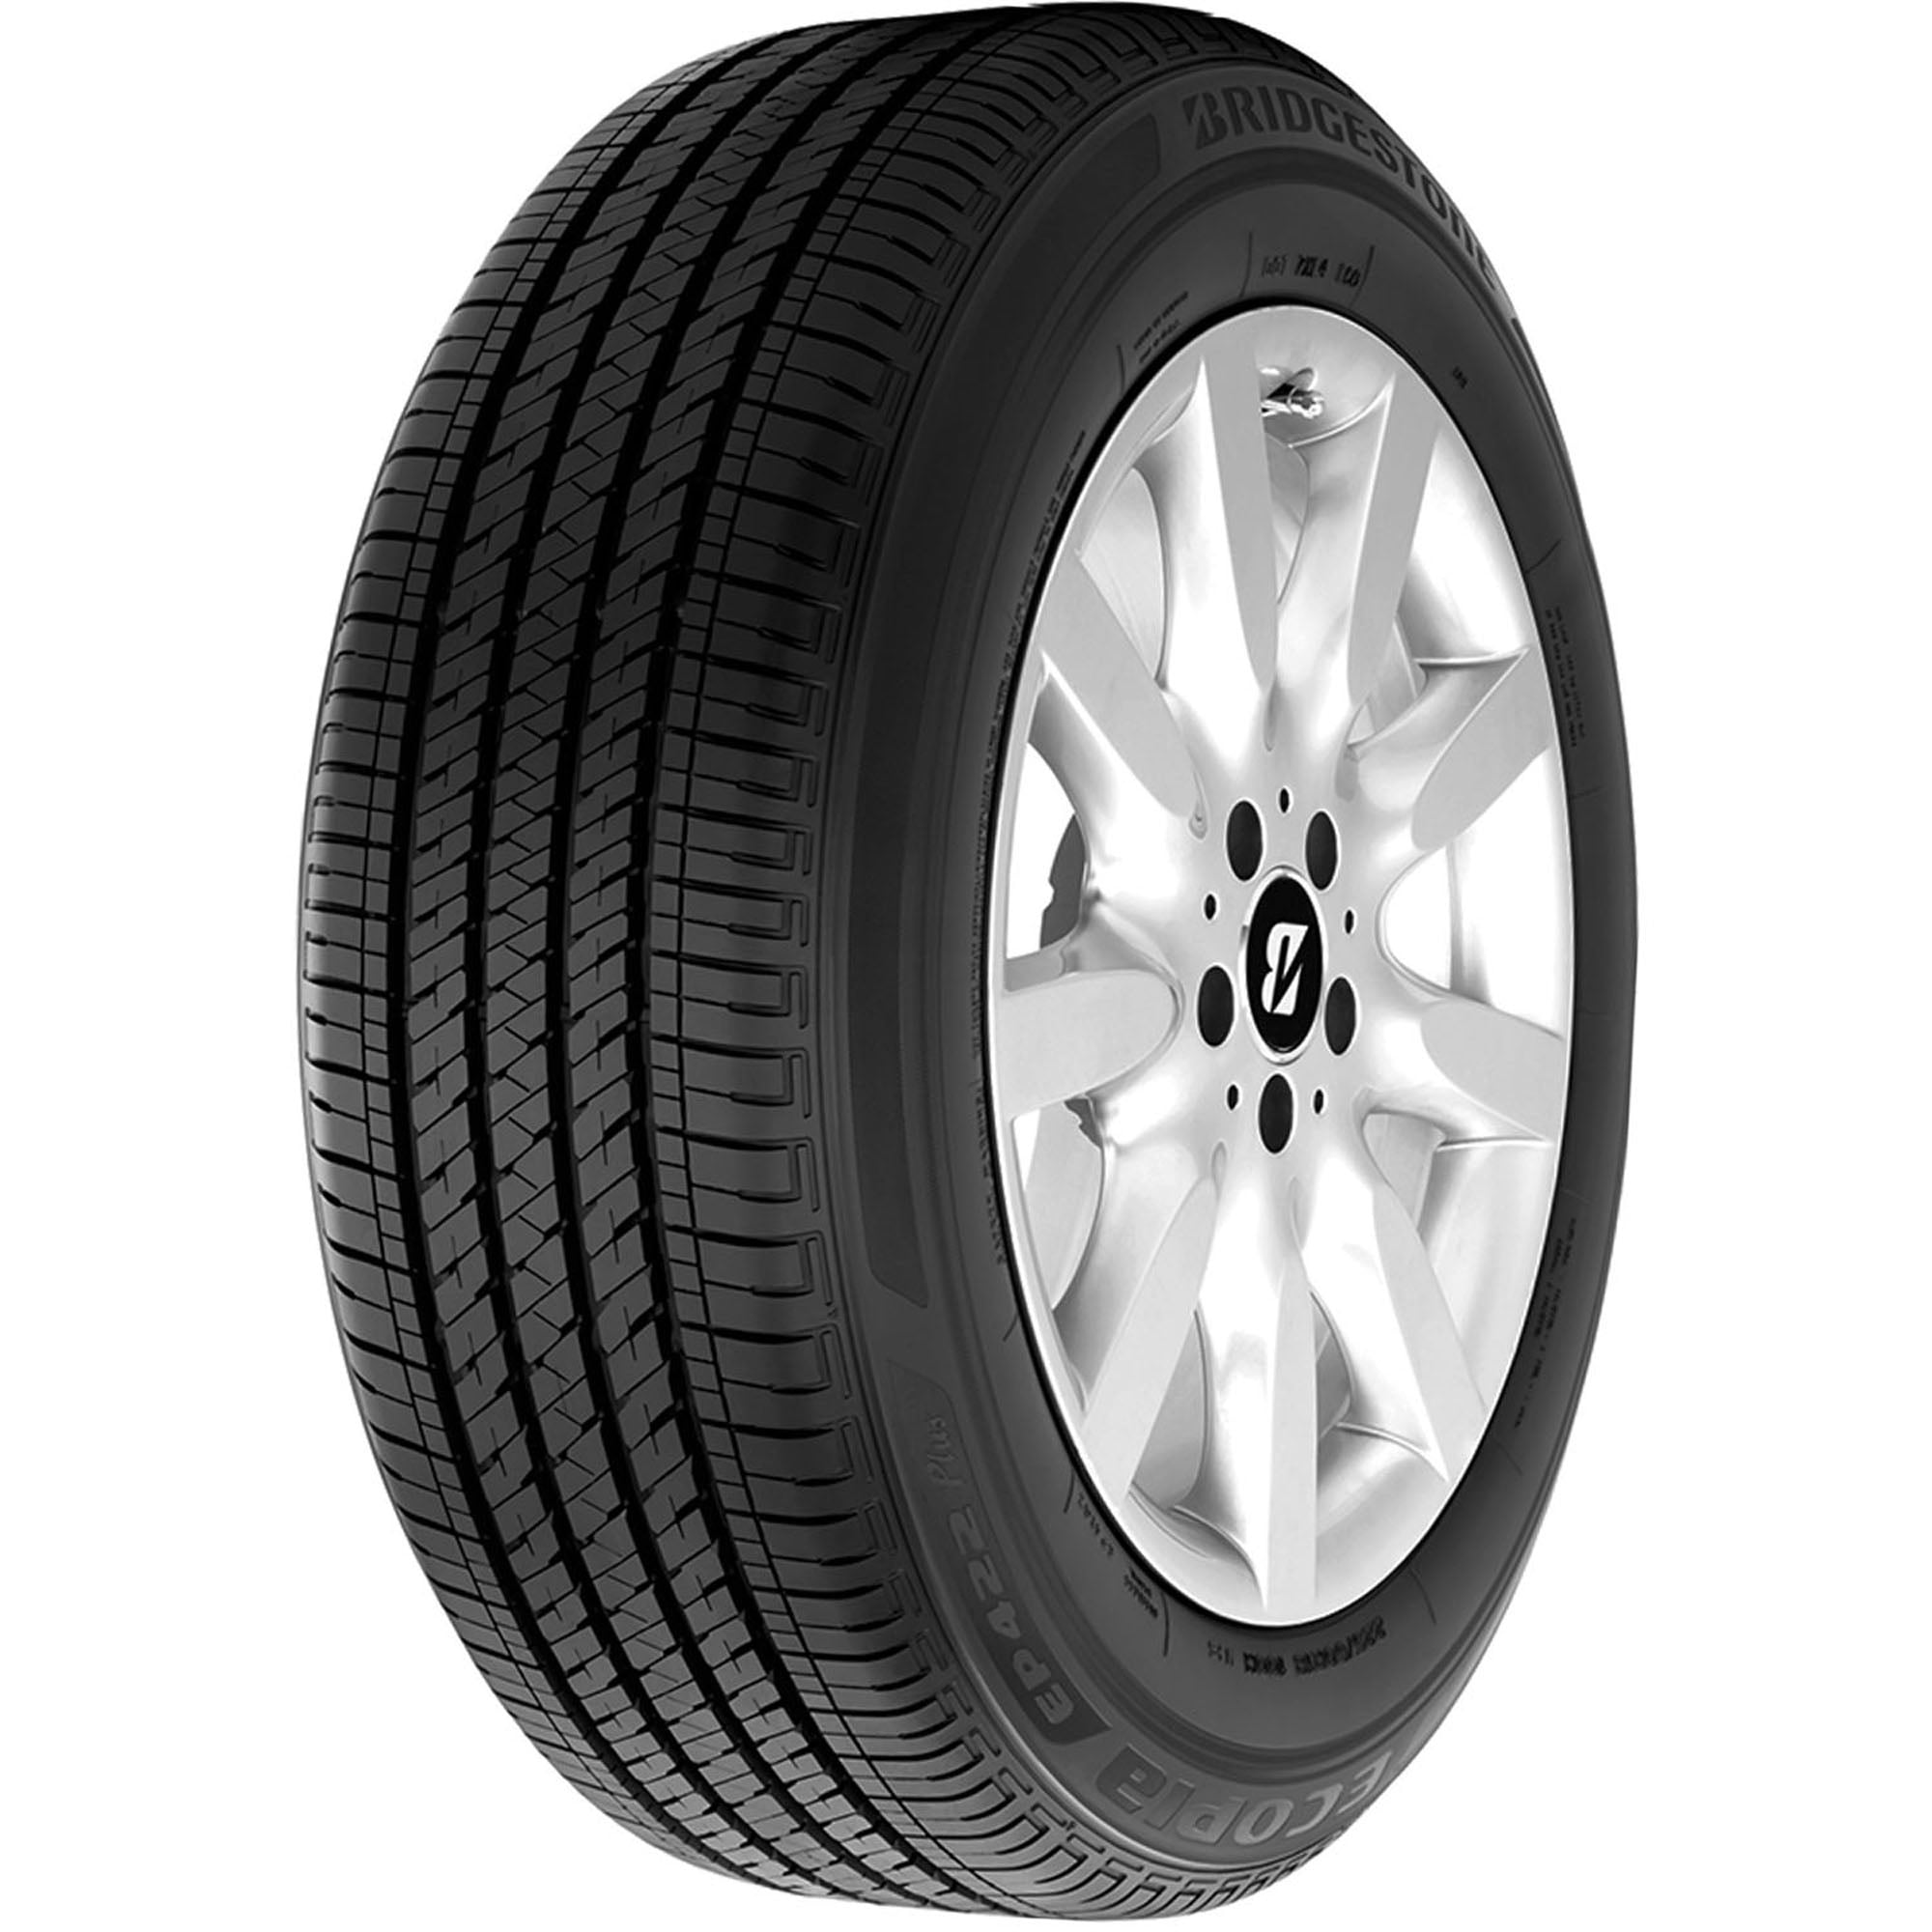 Bridgestone Ecopia EP422 Plus All Season 235/65R16 103T Passenger Tire